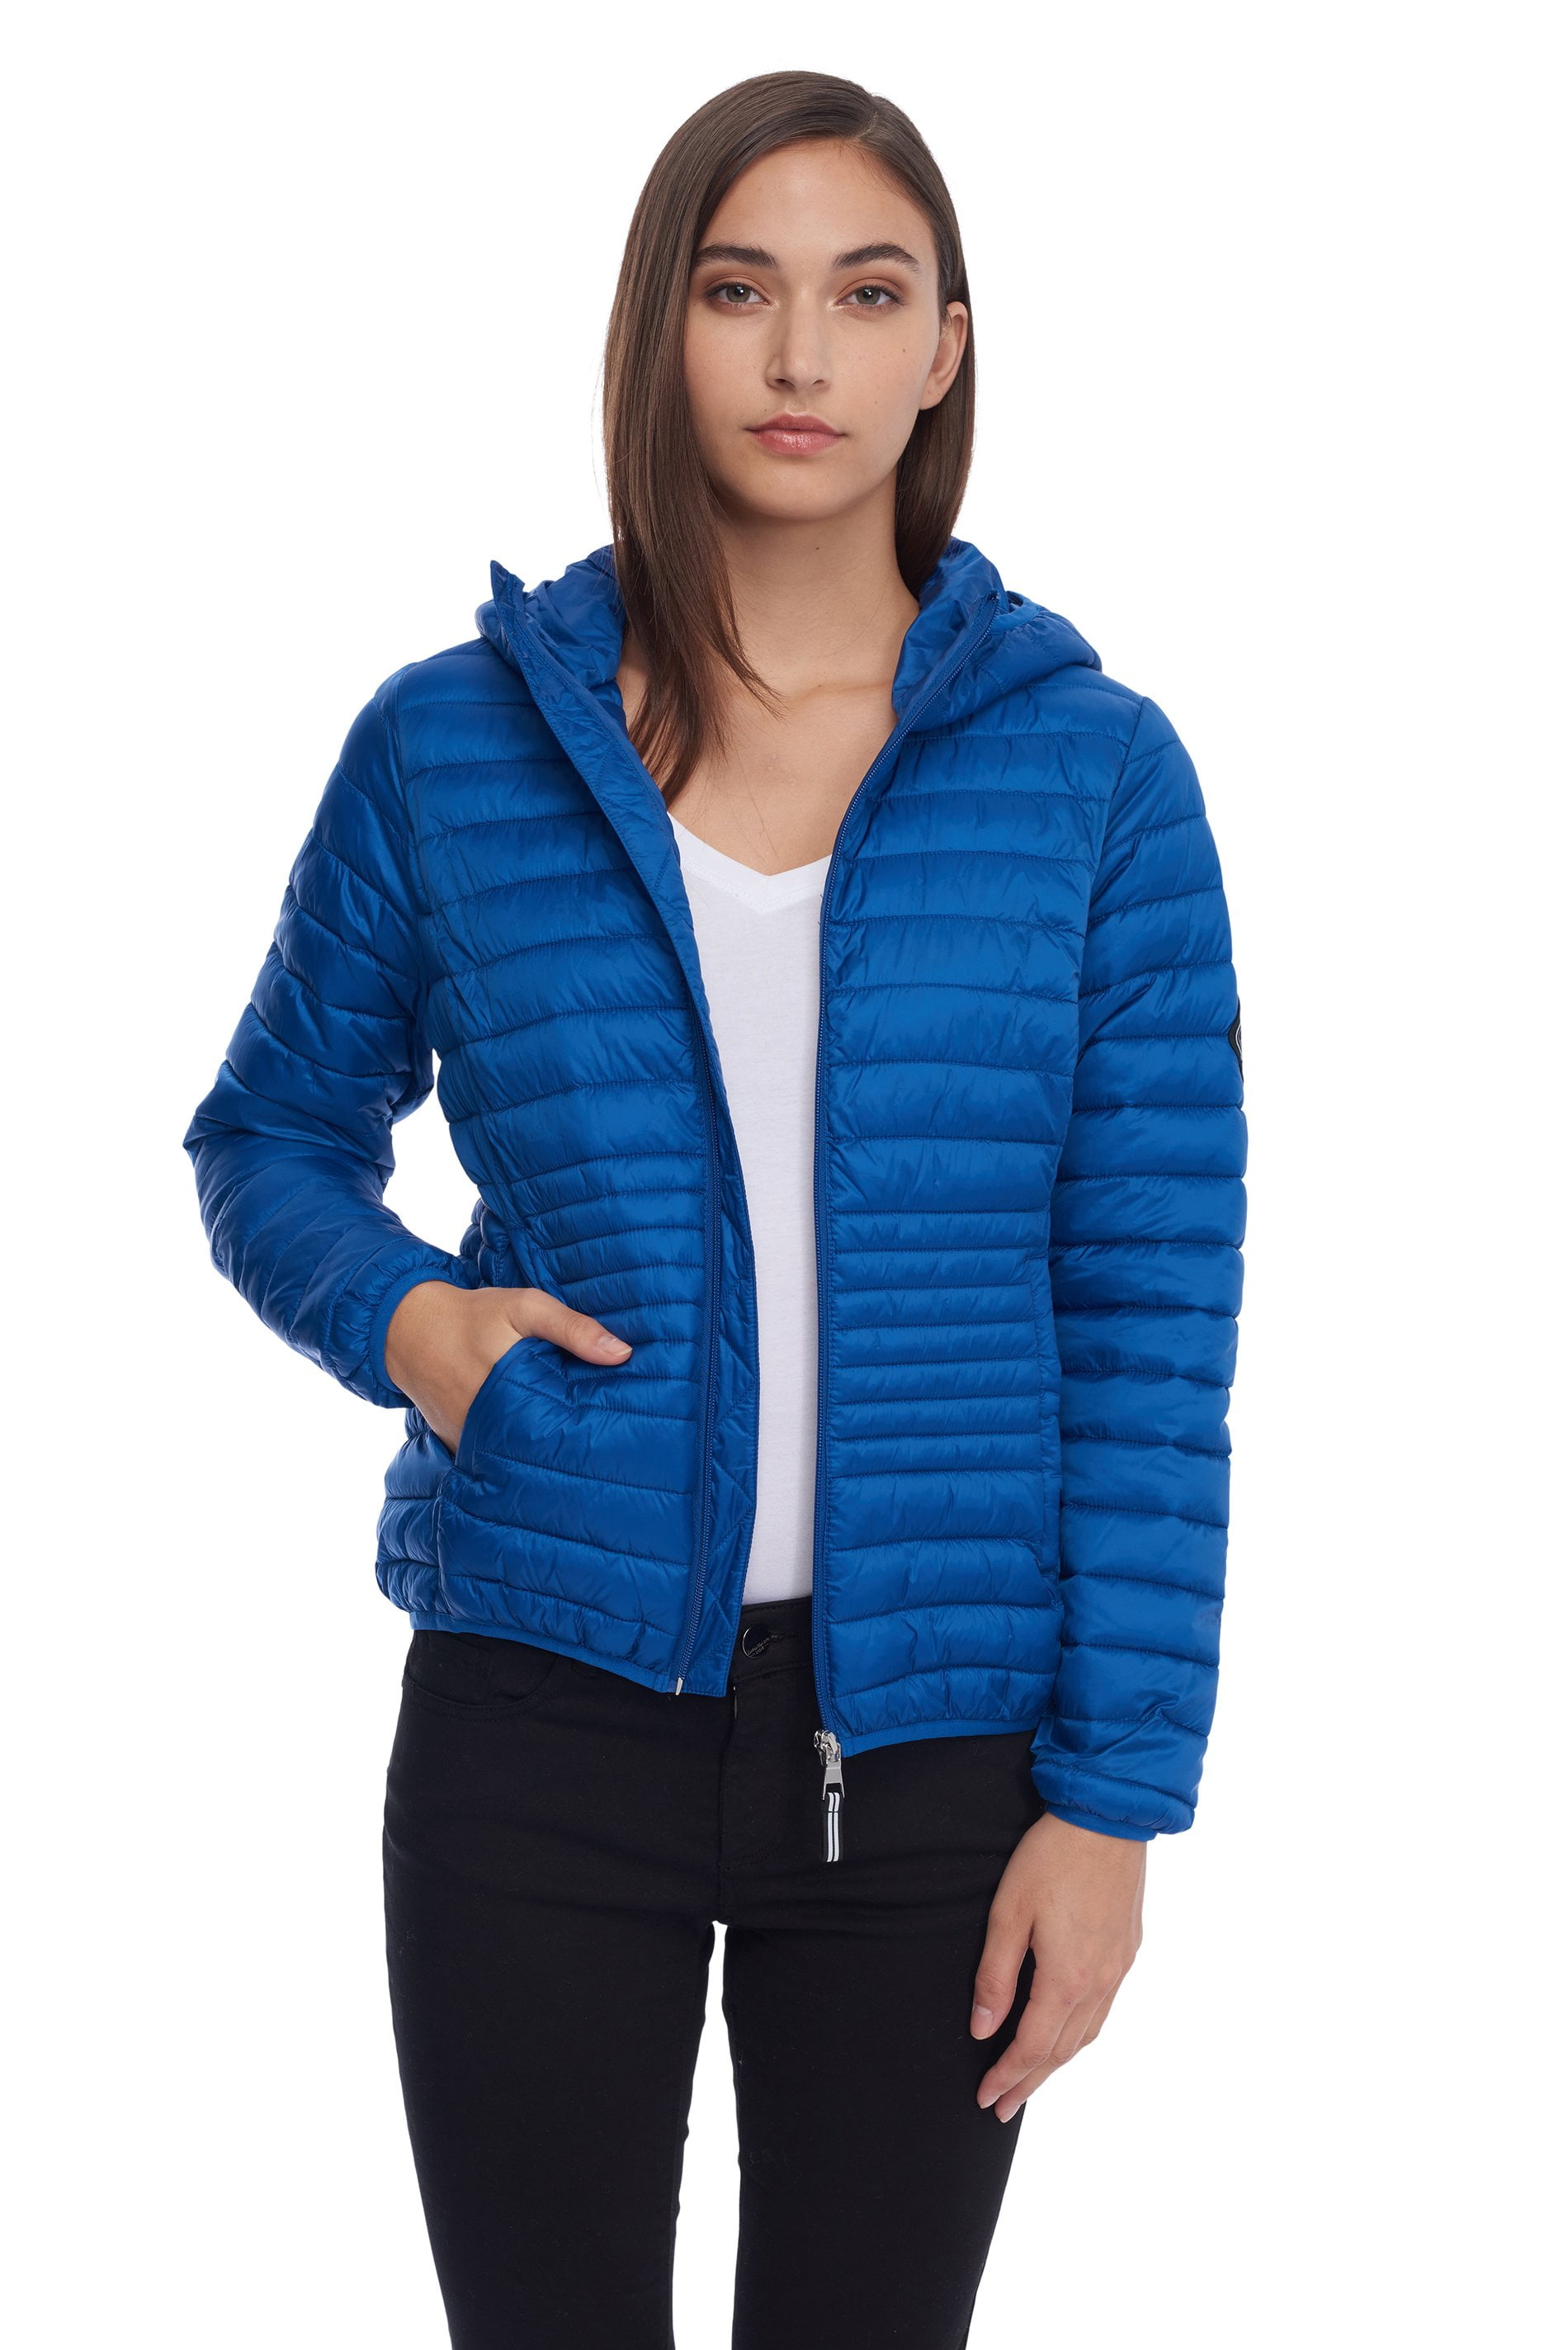 Alpine North Women S Vegan Down Packable Puffer Lightweight Weather Resistant Jacket With